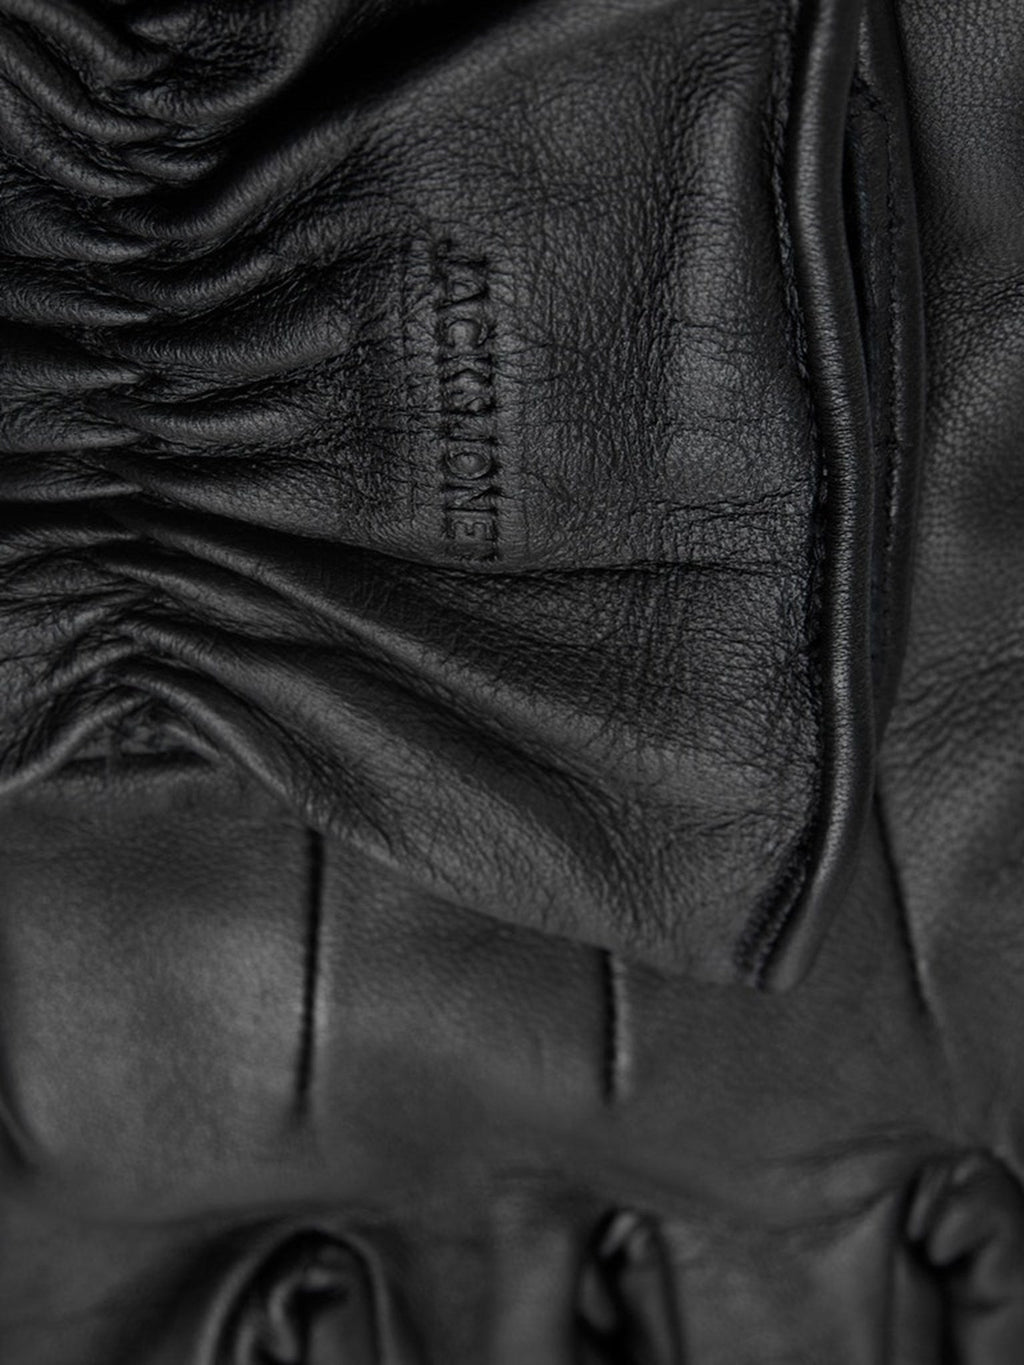 Montana Leather Gloves - Black